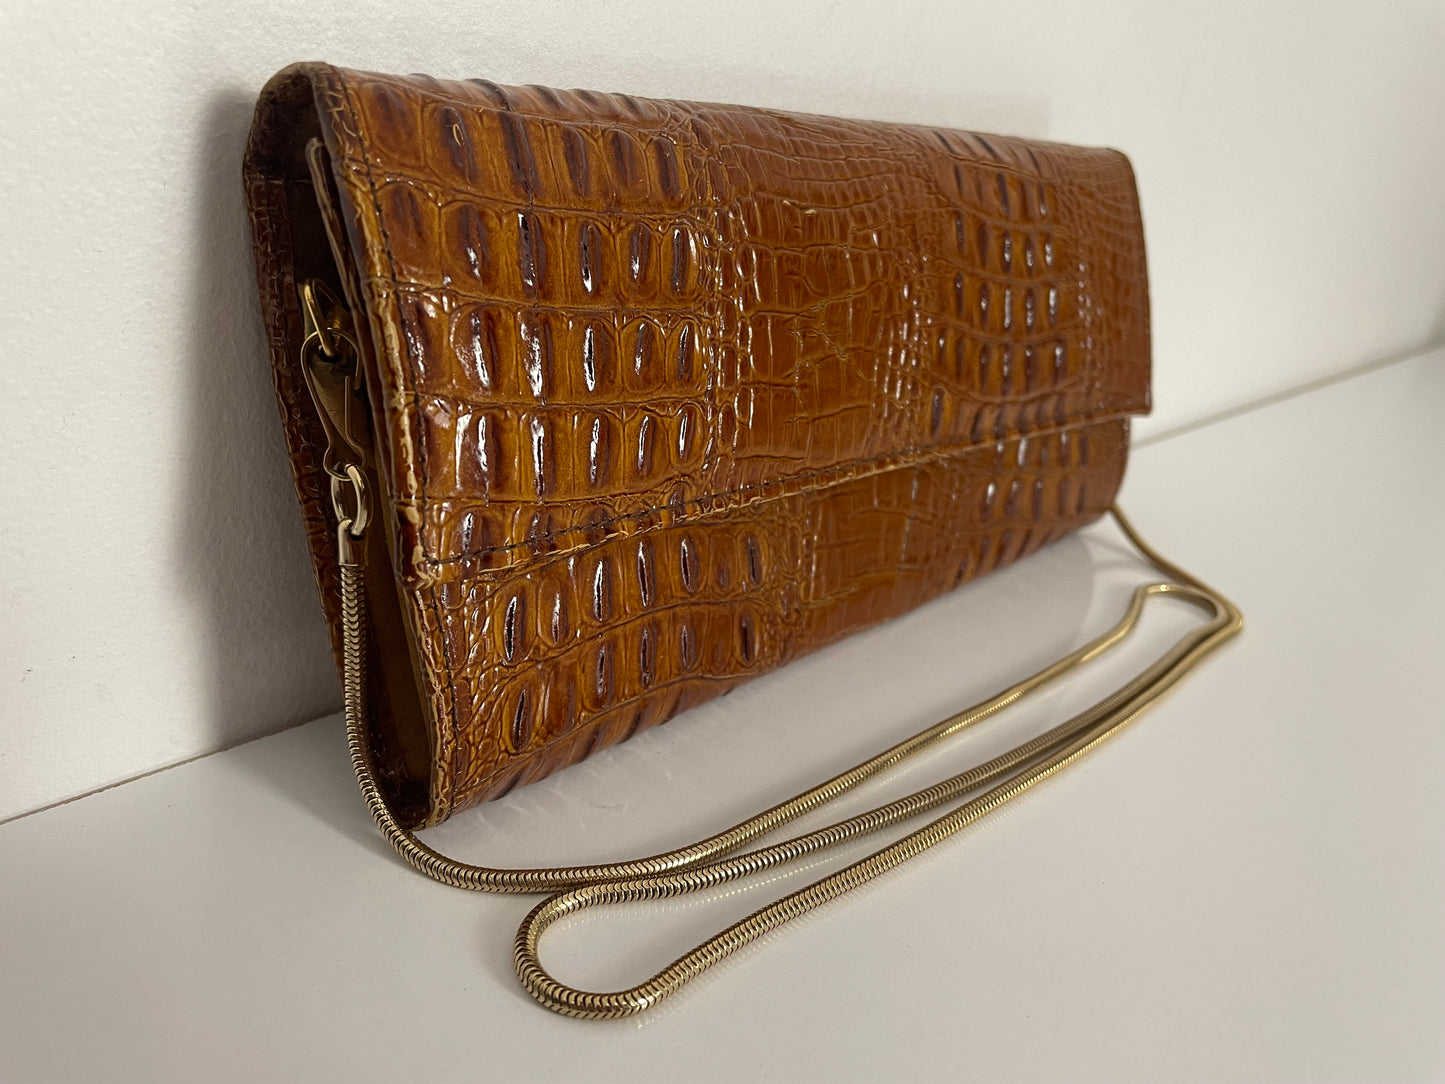 Vintage 1970s Tan Brown Leather Reptile Clutch Or Shoulder Bag